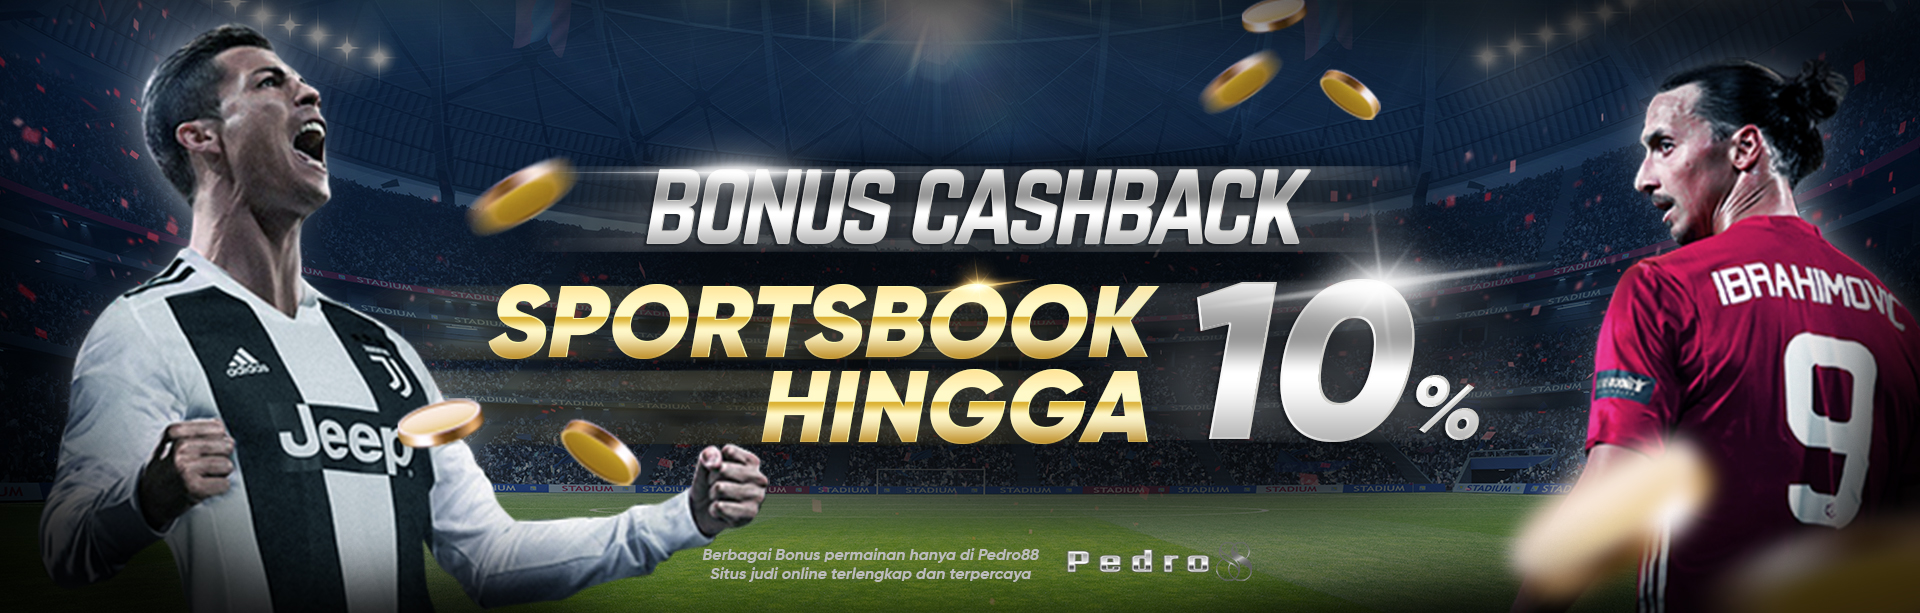 Bonus Cashback Sportsbook up to 10%